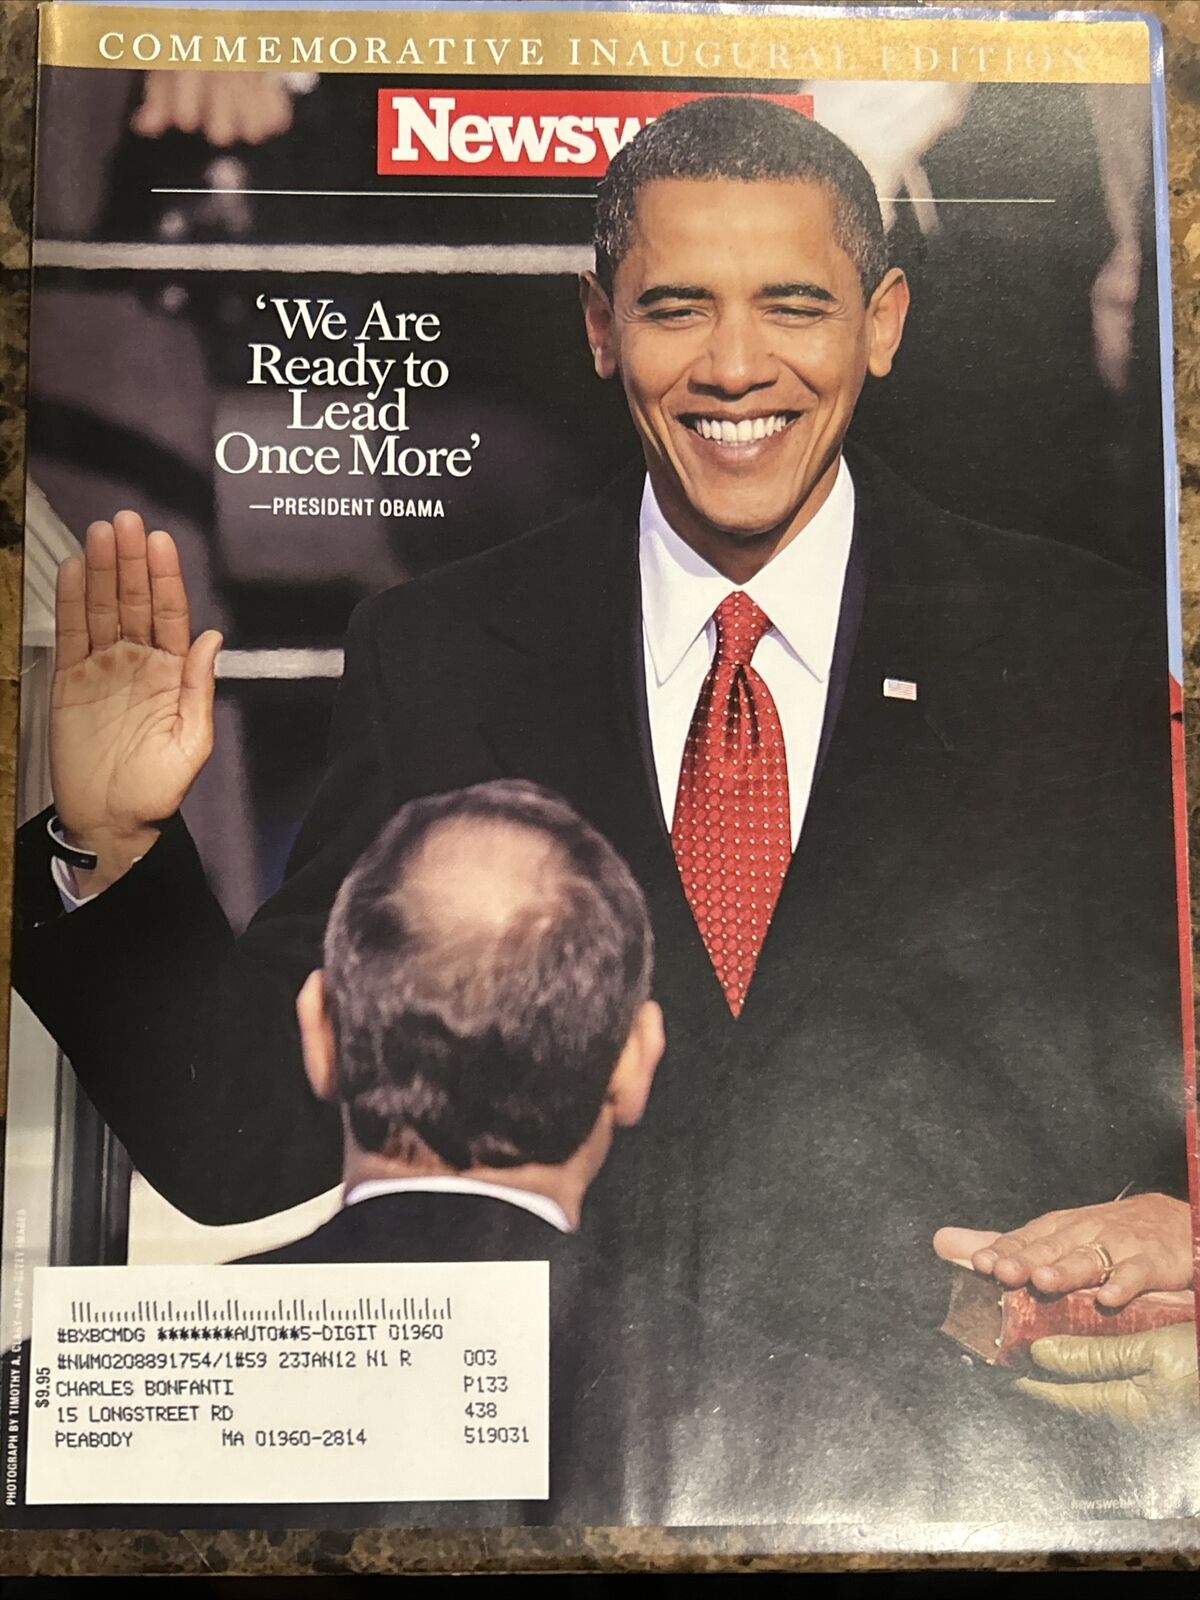 Newsweek Commemorative Inaugural Edition Jan.20,2009